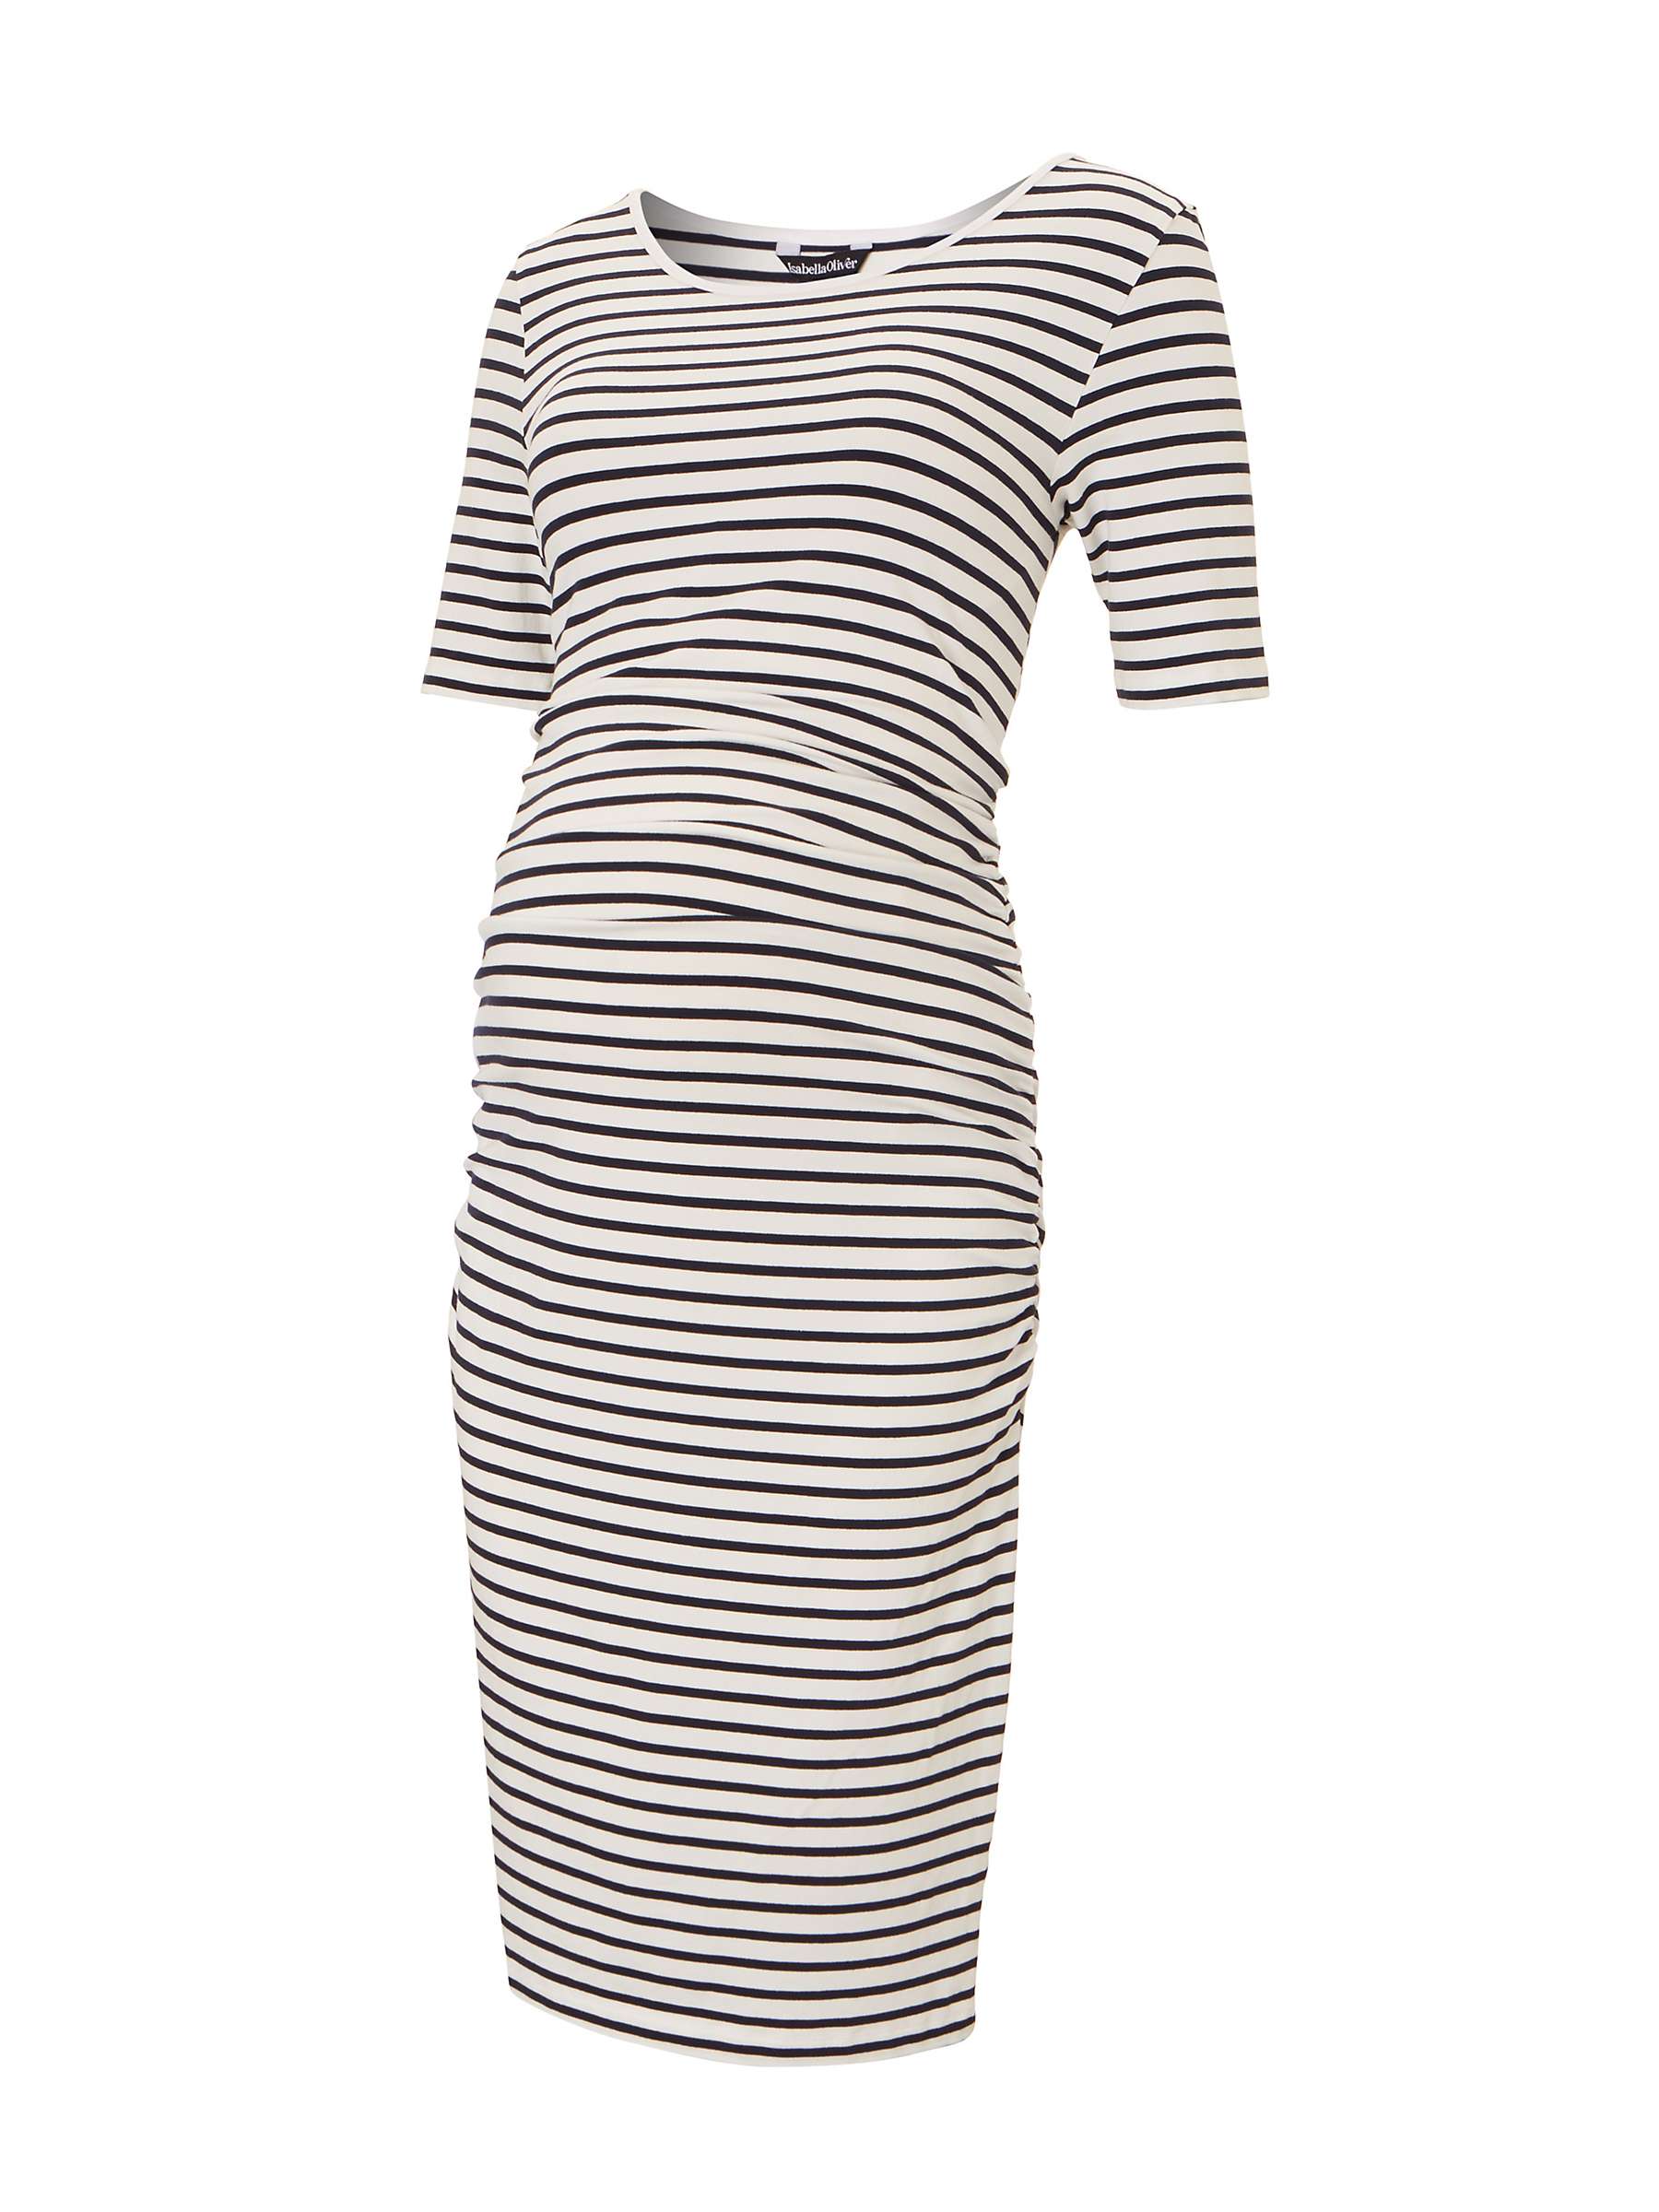 Buy Isabella Oliver Anise Stripe Maternity Dress, Soft White Online at johnlewis.com